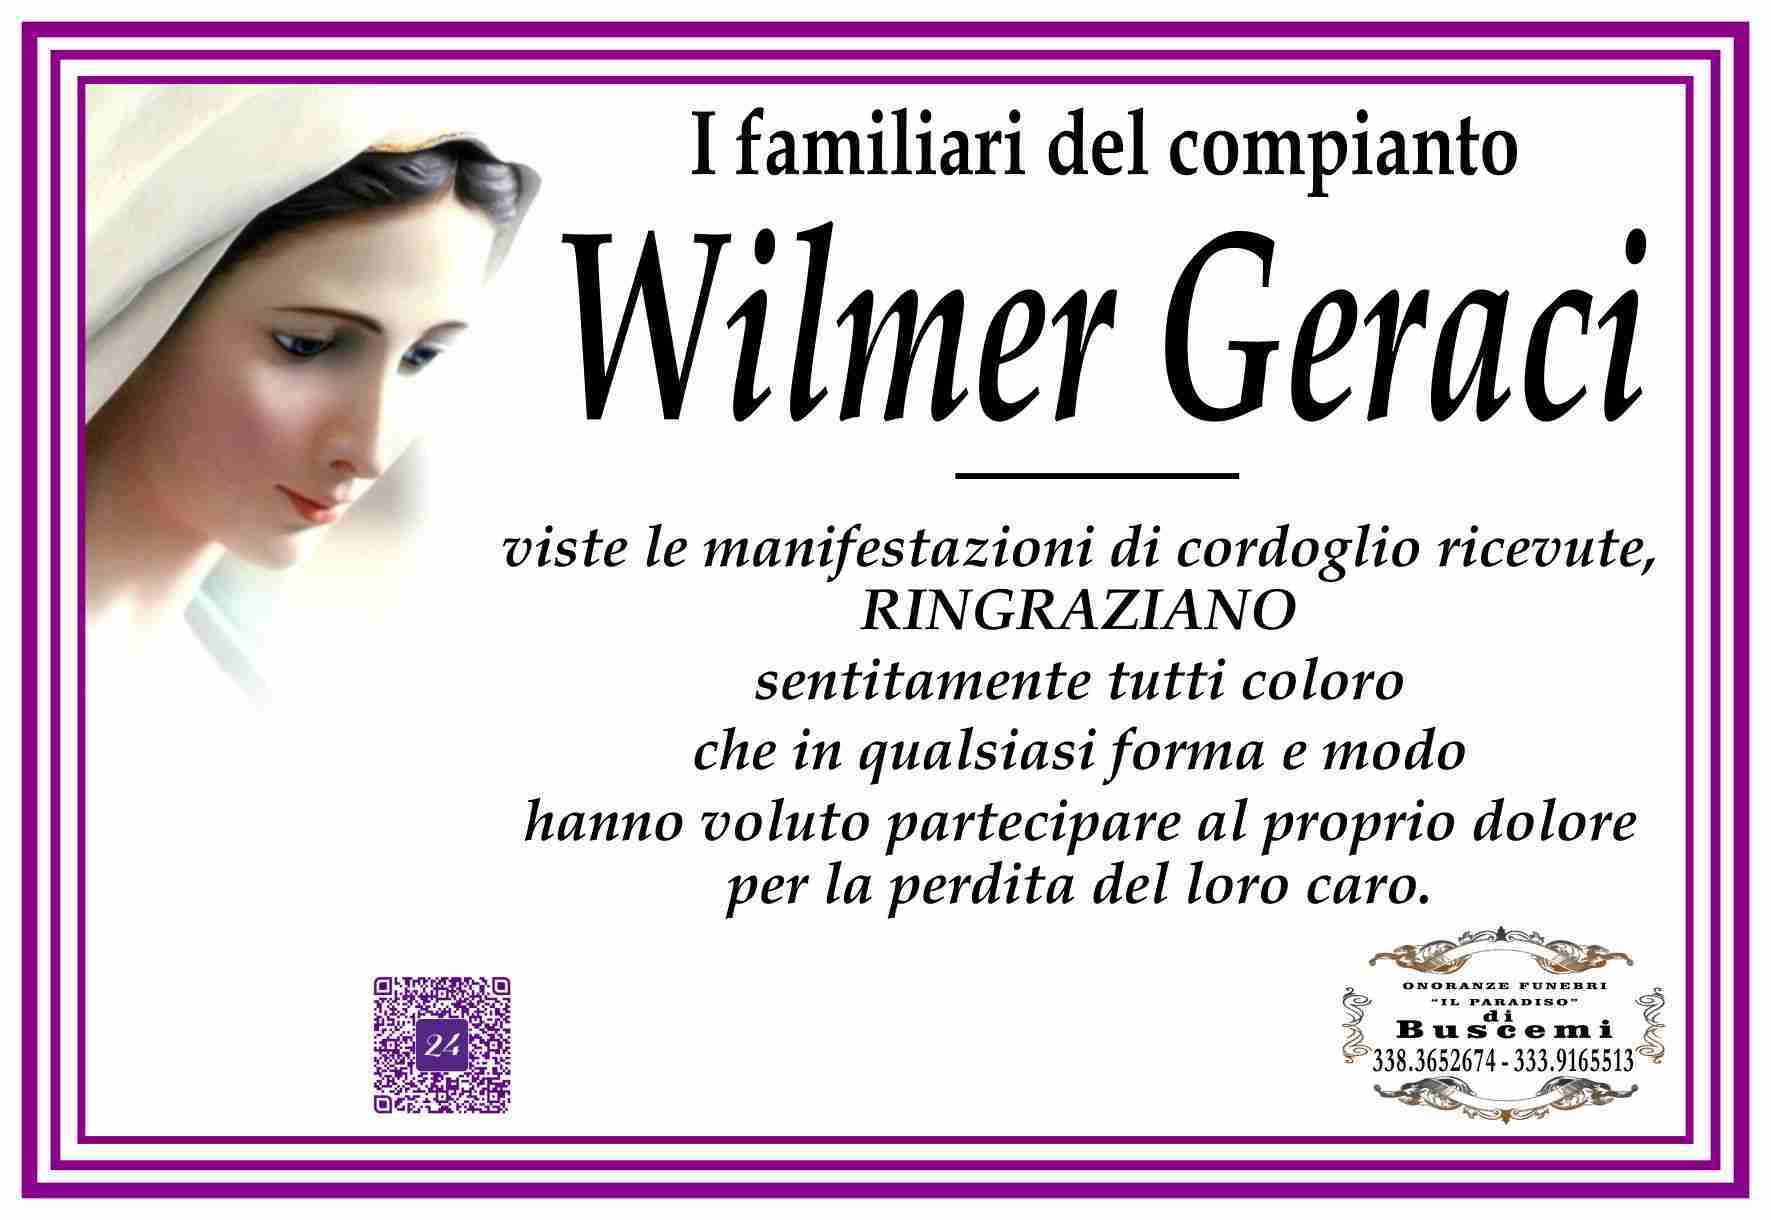 Wilmer Geraci